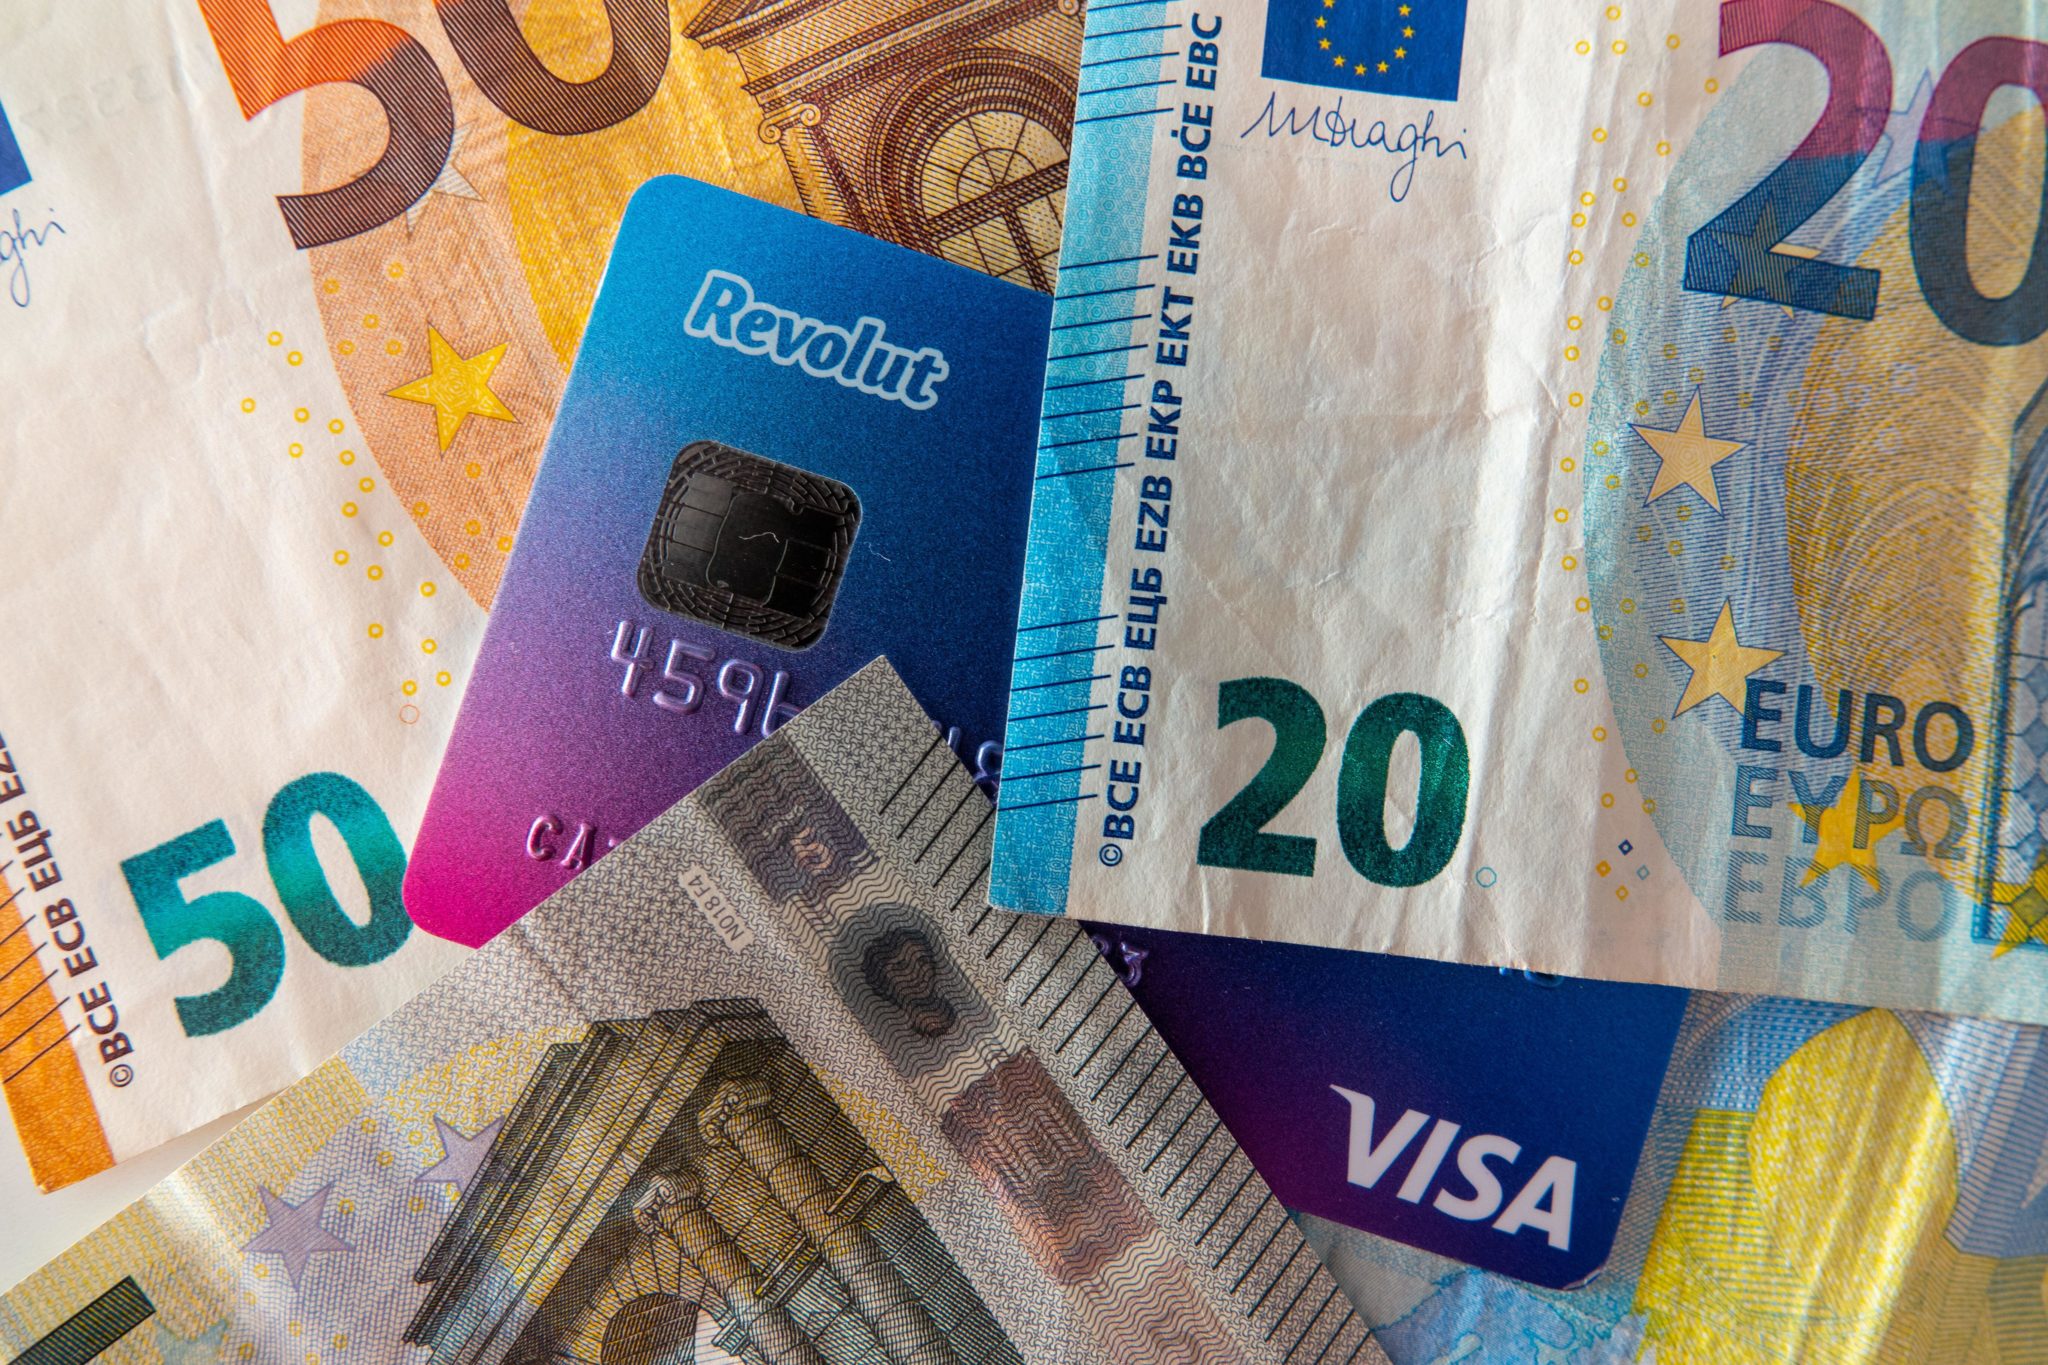 A Revolut Visa credit card and paper Euro money